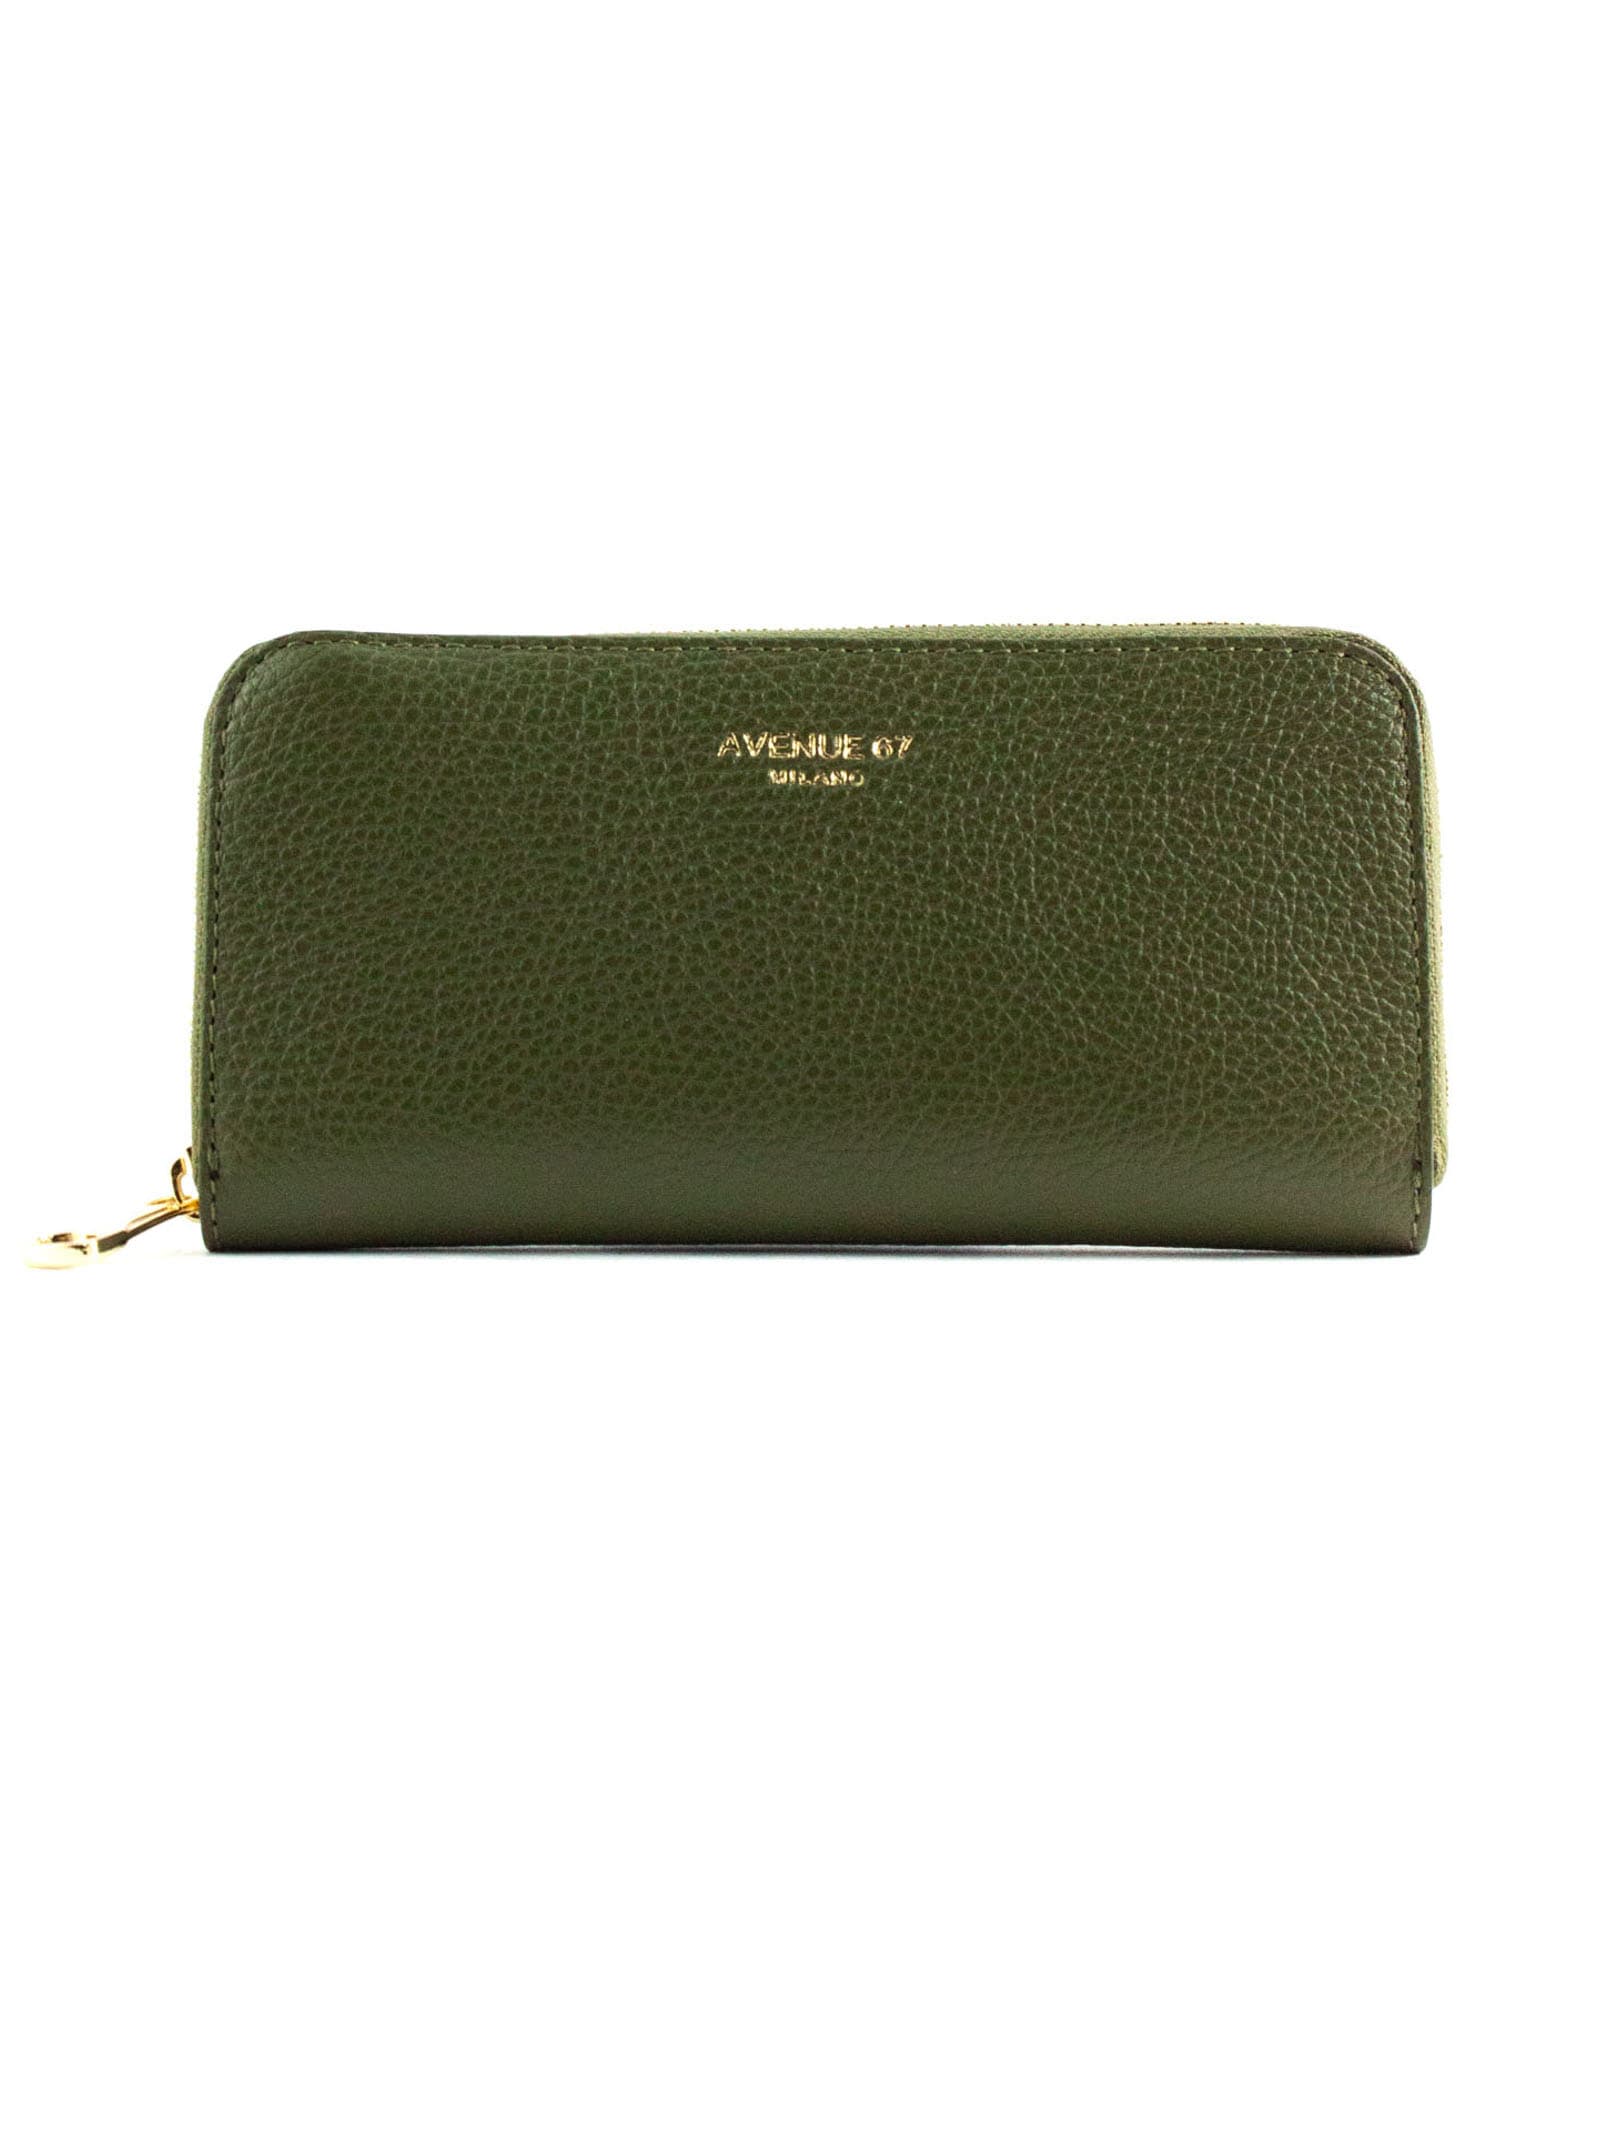 Avenue 67 Green Leather Wallet